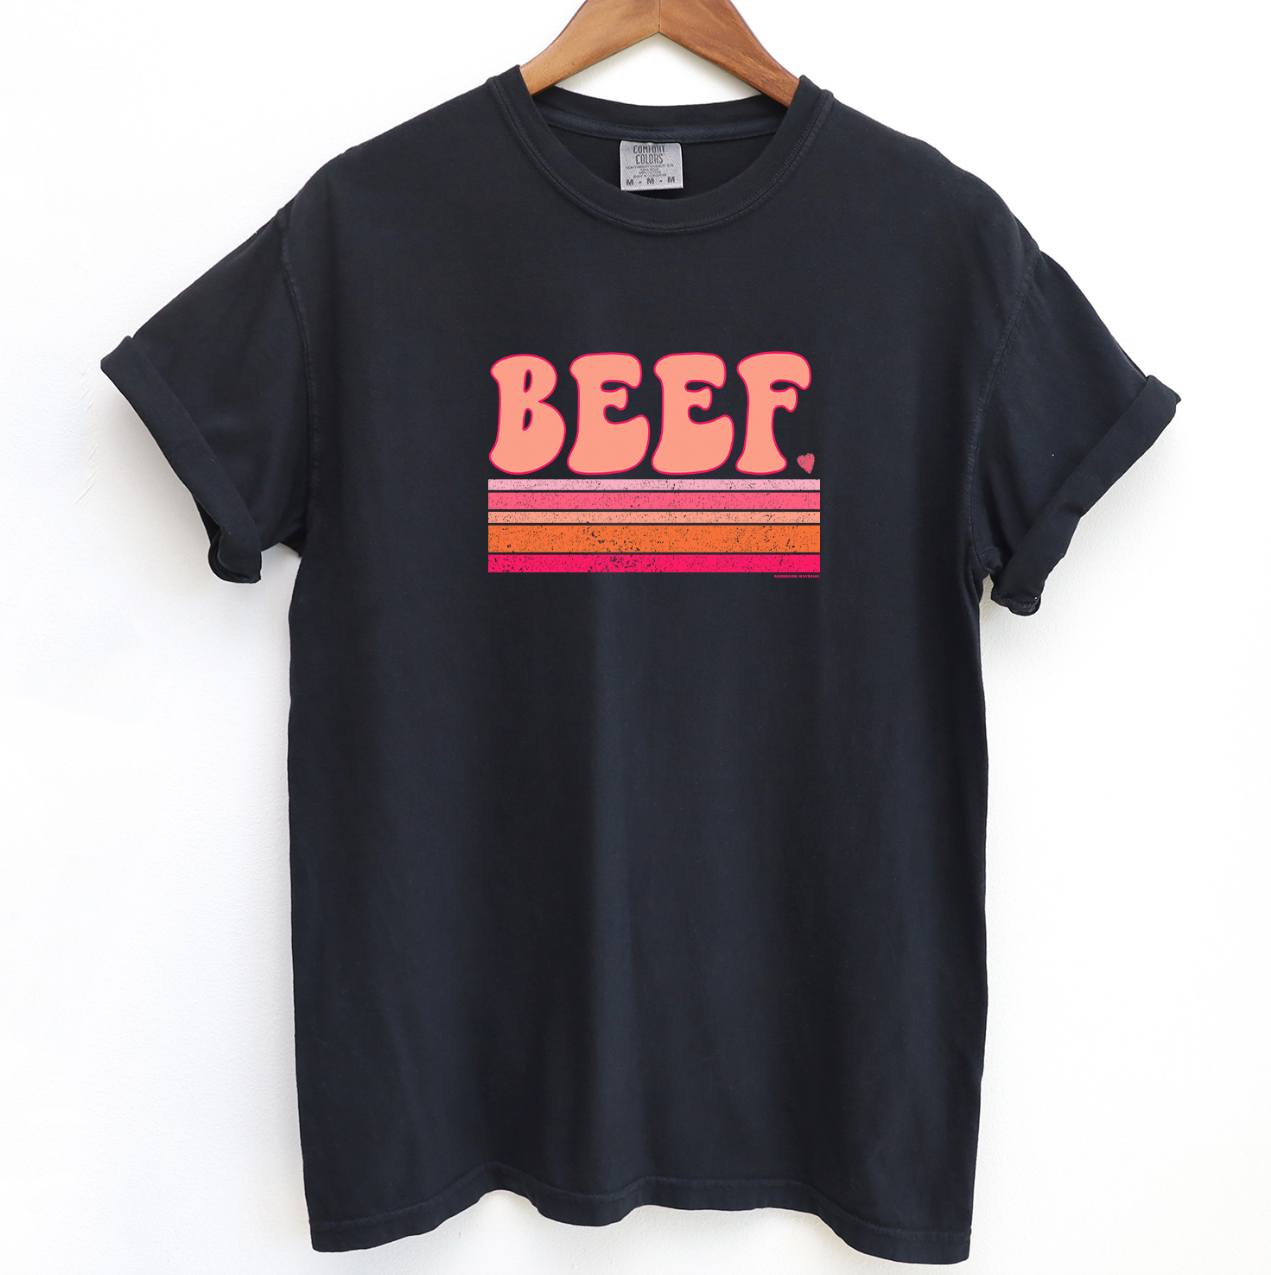 Peachy Beef ComfortWash/ComfortColor T-Shirt (S-4XL) - Multiple Colors!